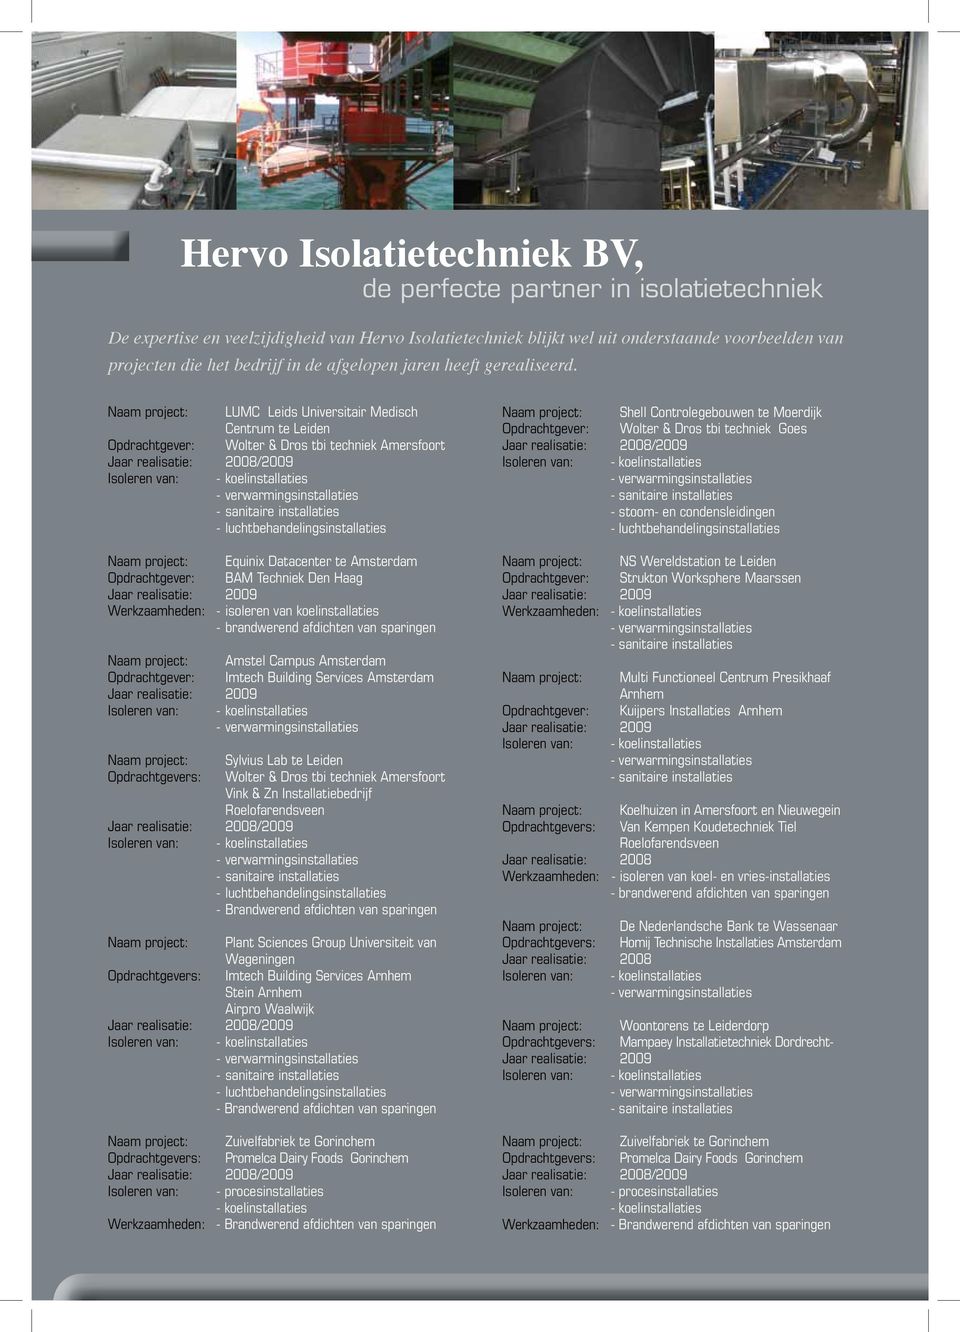 Naam project: LUMC Leids Universitair Medisch Centrum te Leiden Opdrachtgever: Wolter & Dros tbi techniek Amersfoort - luchtbehandelingsinstallaties Naam project: Equinix Datacenter te Amsterdam